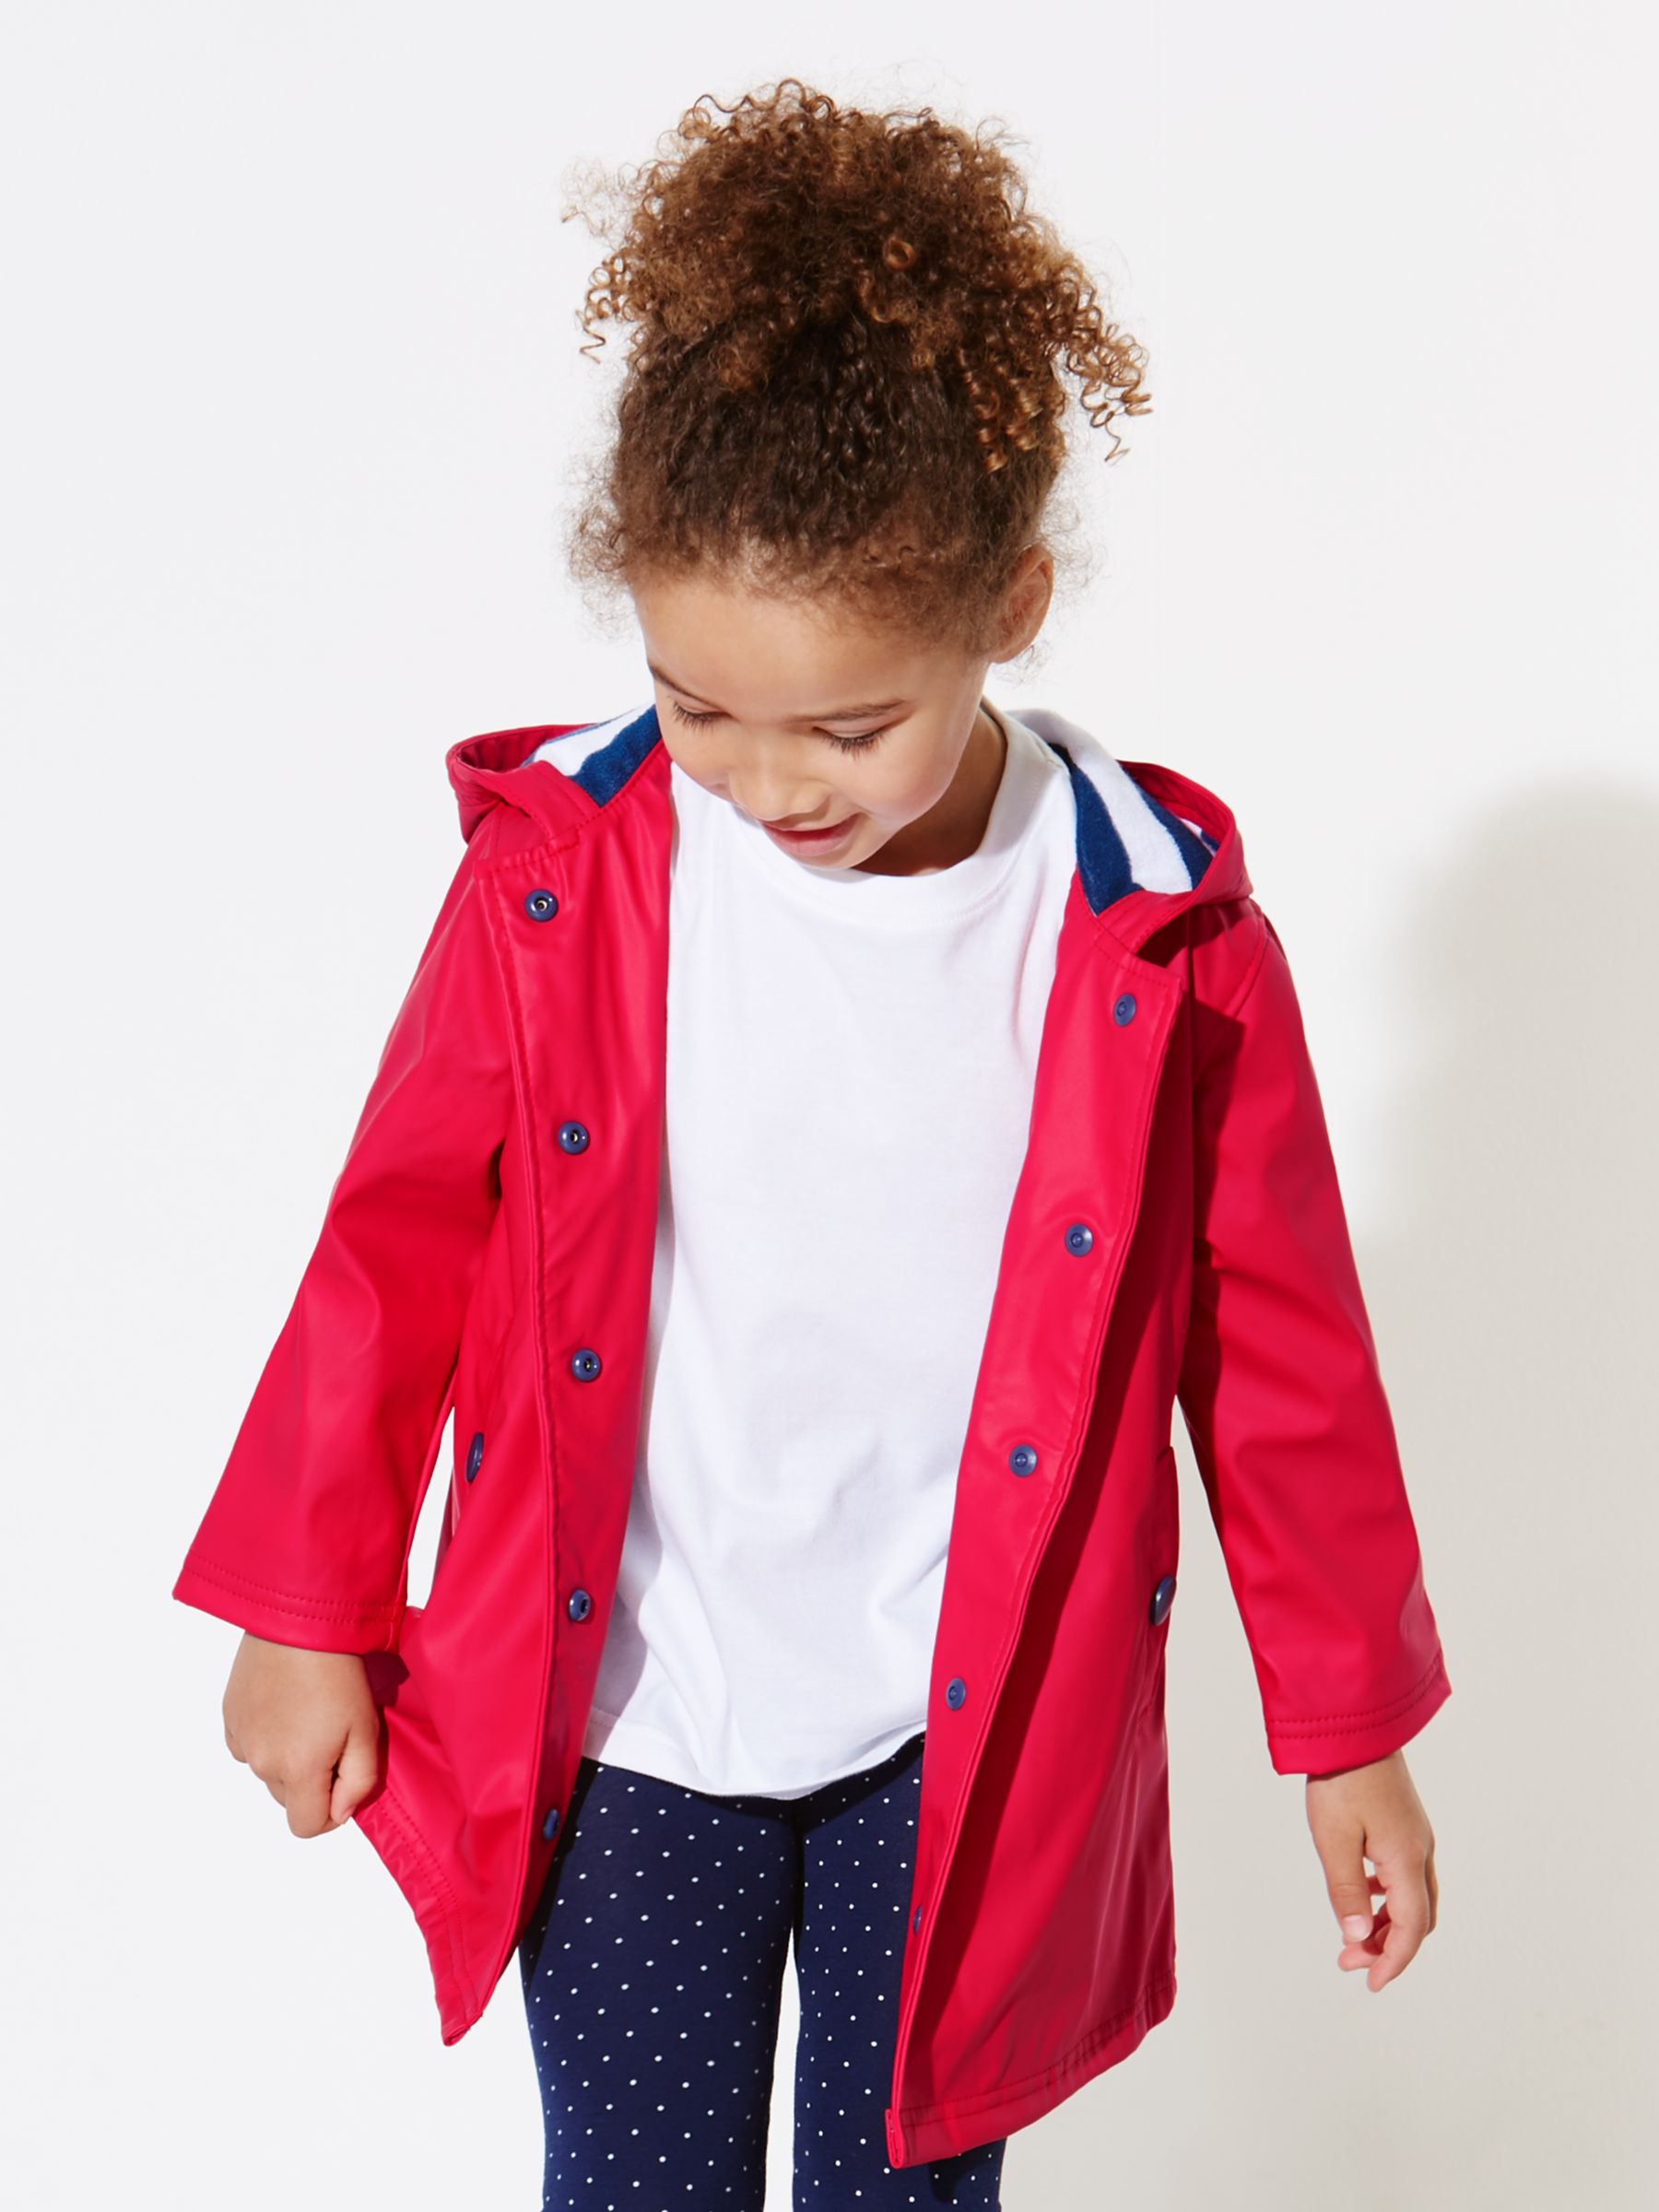 Hatley Girls' Splash Jacket, Red, 8 years